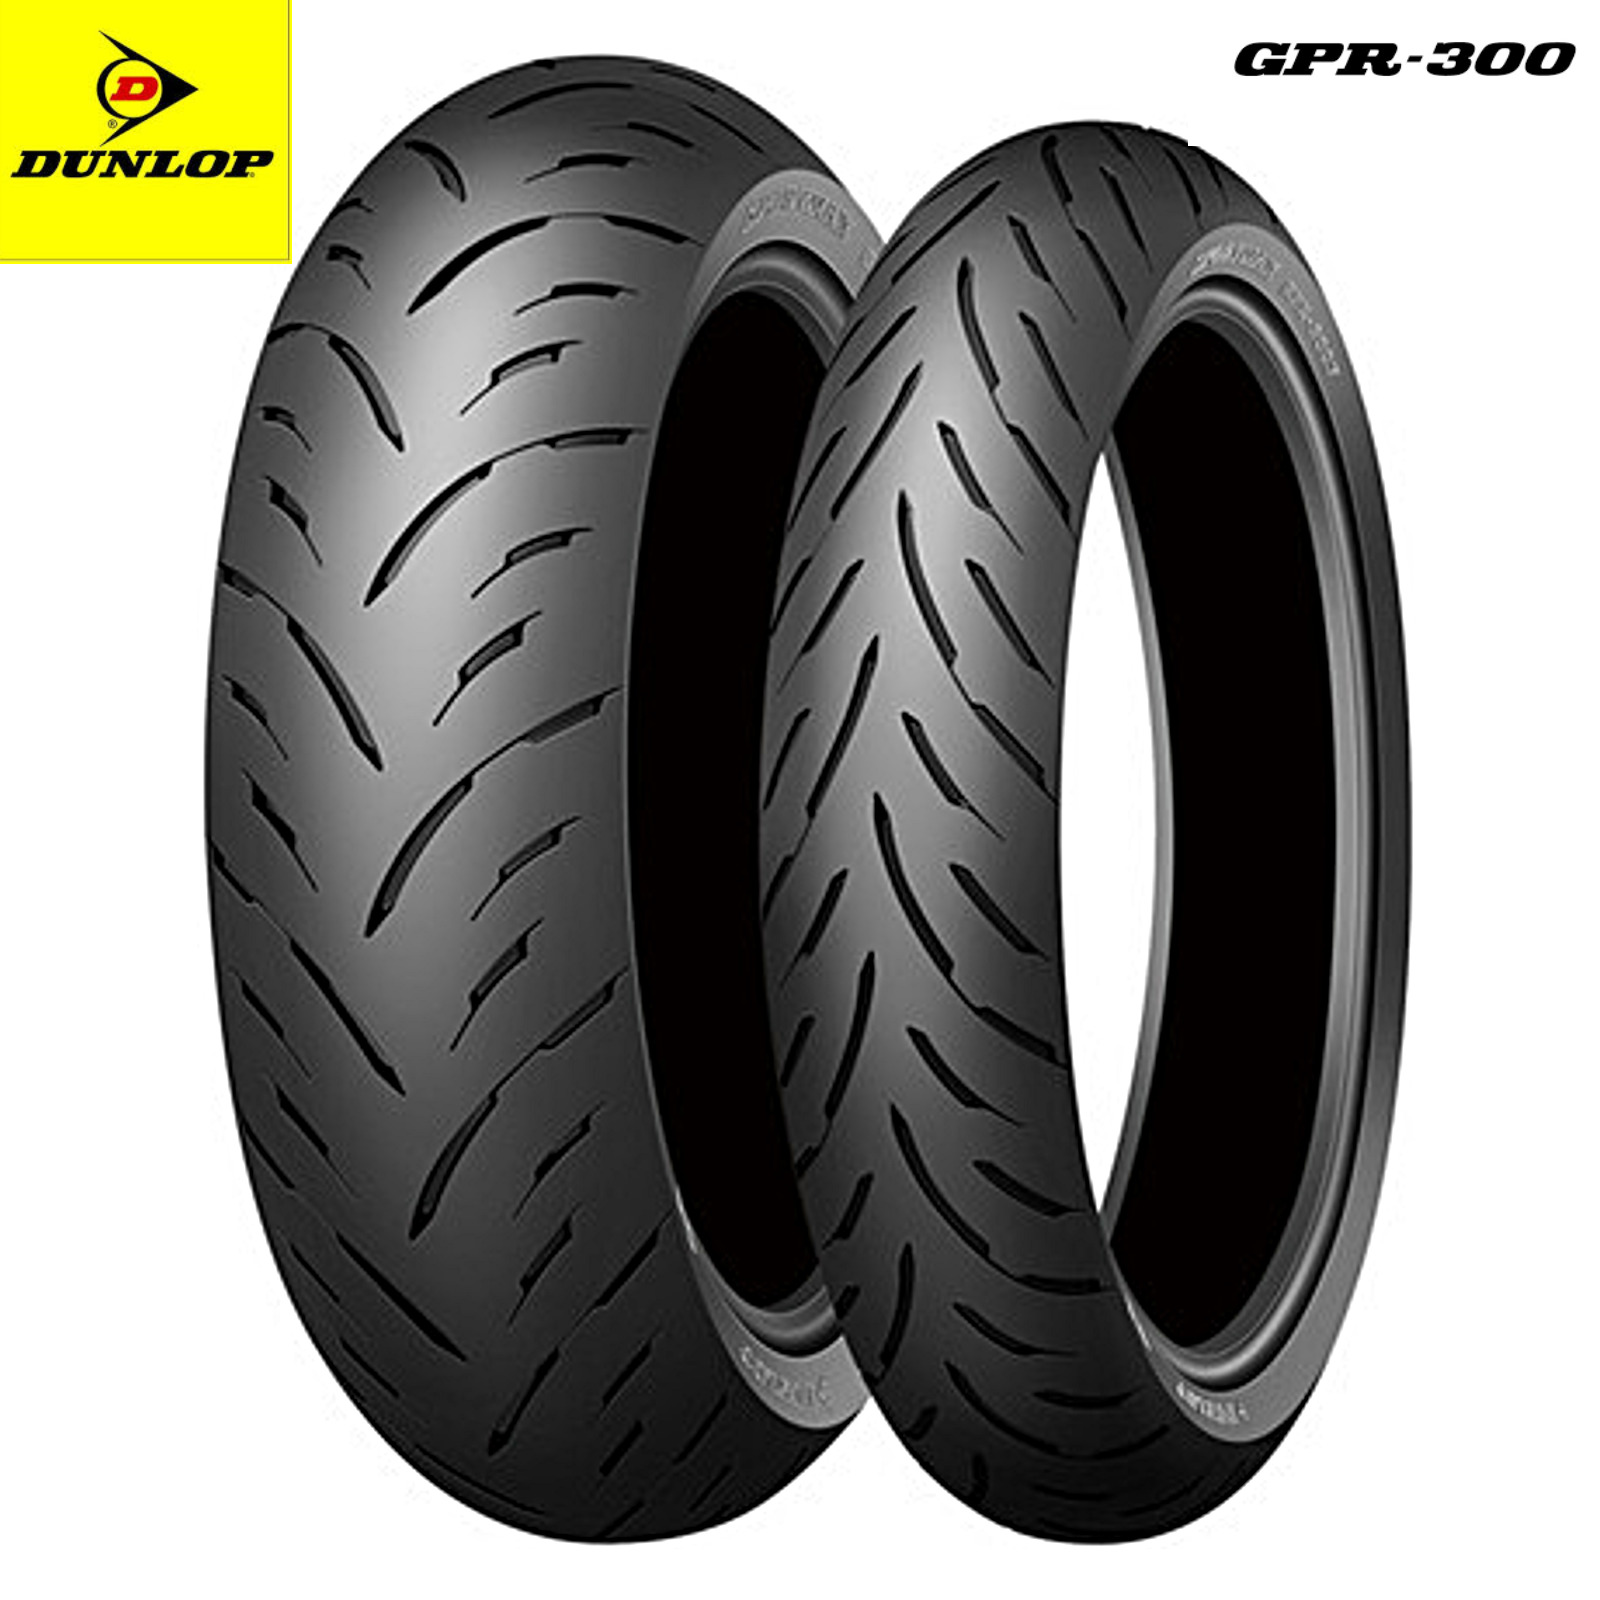 120/70-17 190/50-17 Dunlop Sportmax Motorcycle 2 Tire Set  120/70zr17 190/50zr17